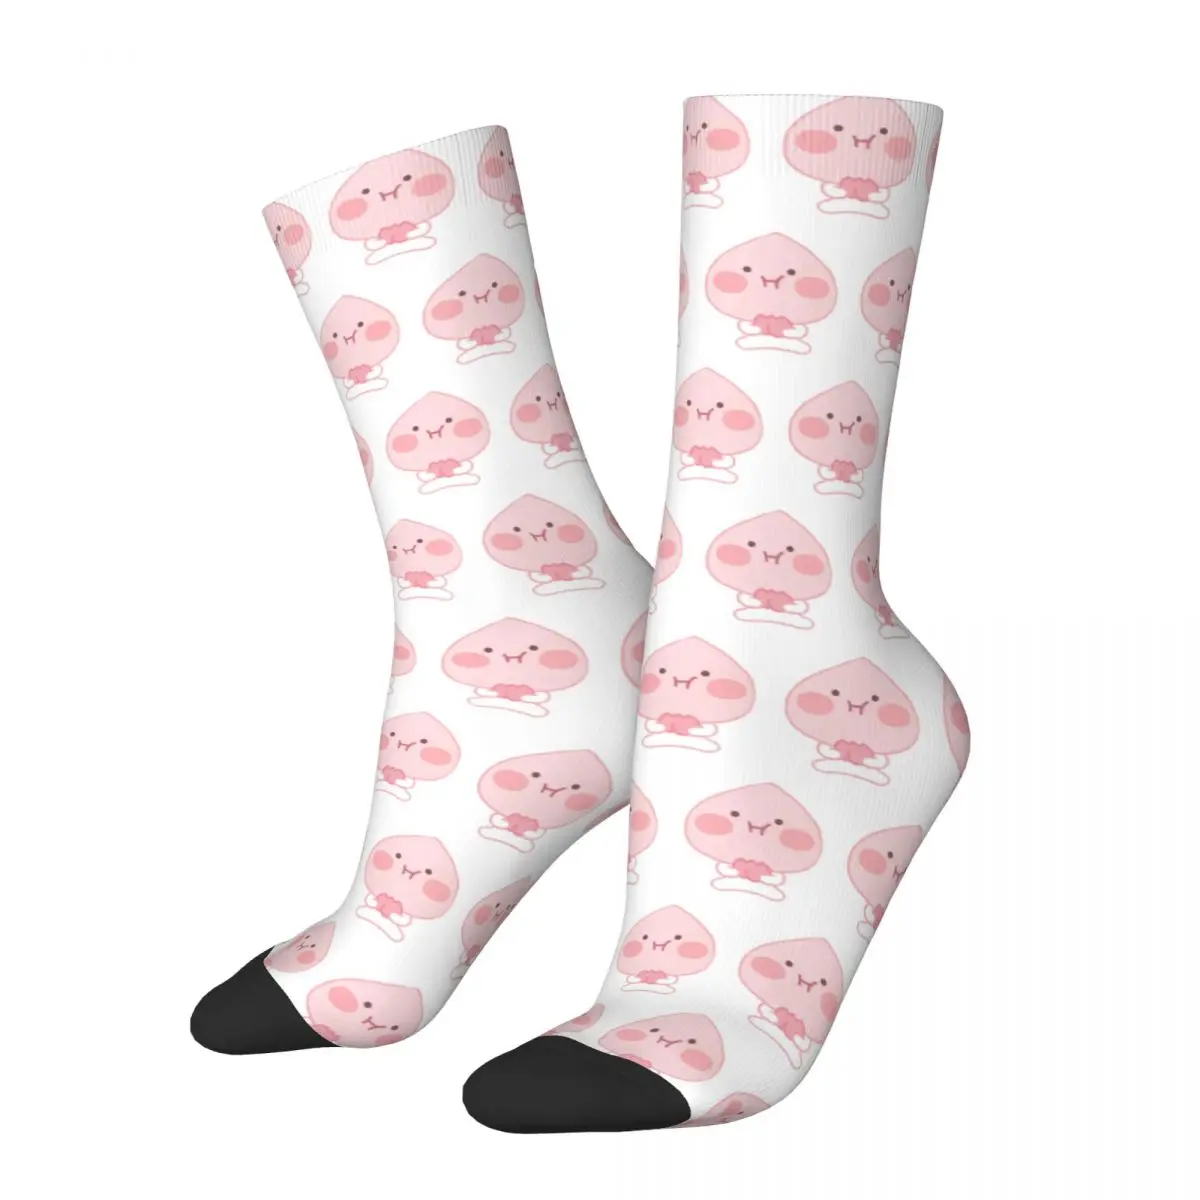 

Crazy Design Apeach Kakao Friends Sports Socks Polyester Long Socks for Women Men Breathable